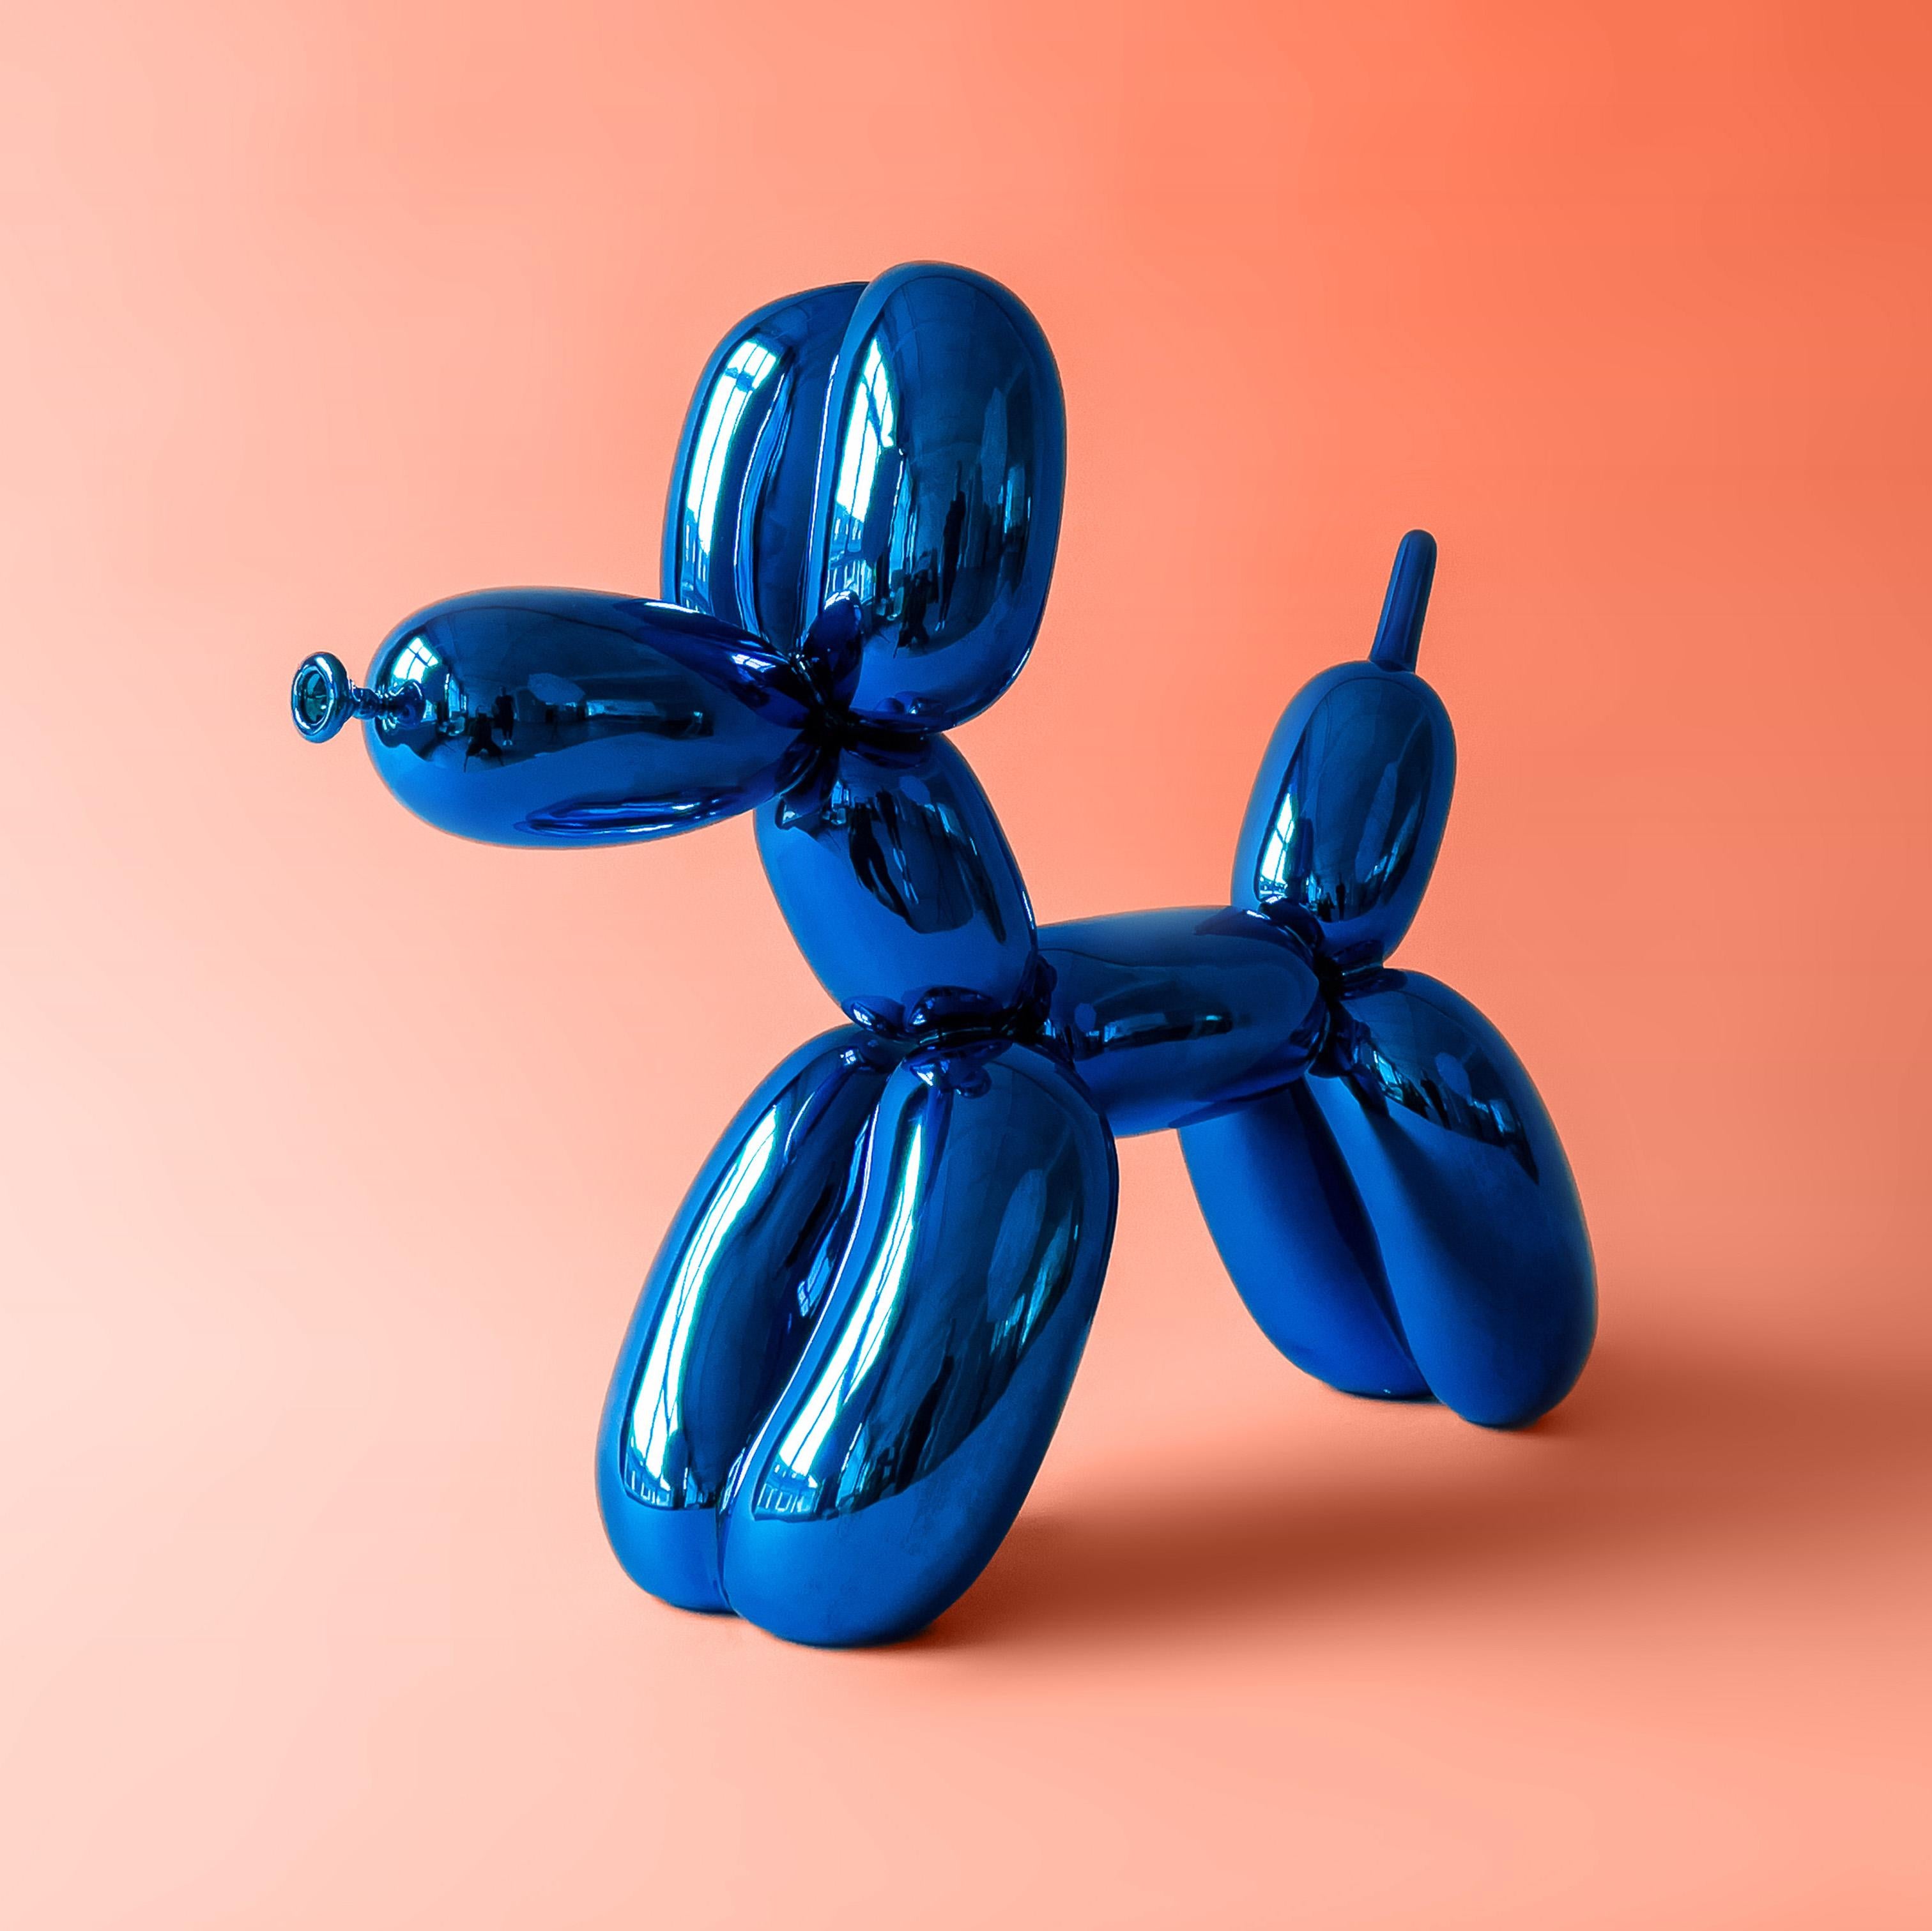 Blue Balloon Dog Sculpture by Jeff Koons, Porcelain, Contemporary Art